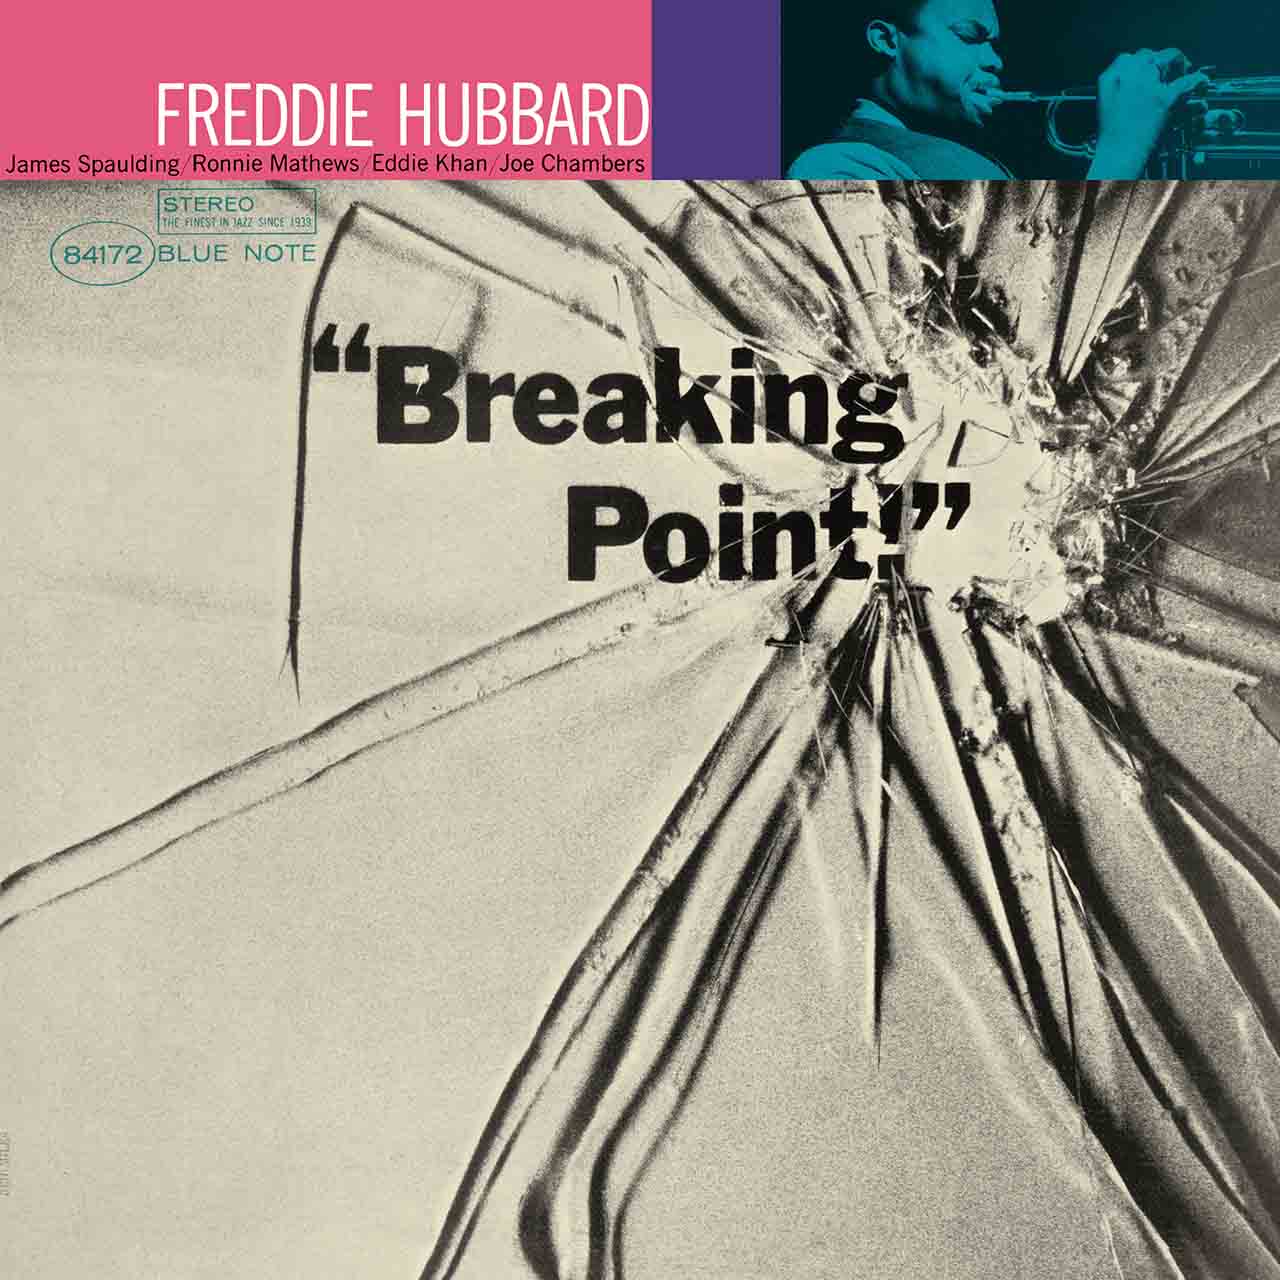 ‘Breaking Point!’: Freddie Hubbard Breaks New Musical Ground